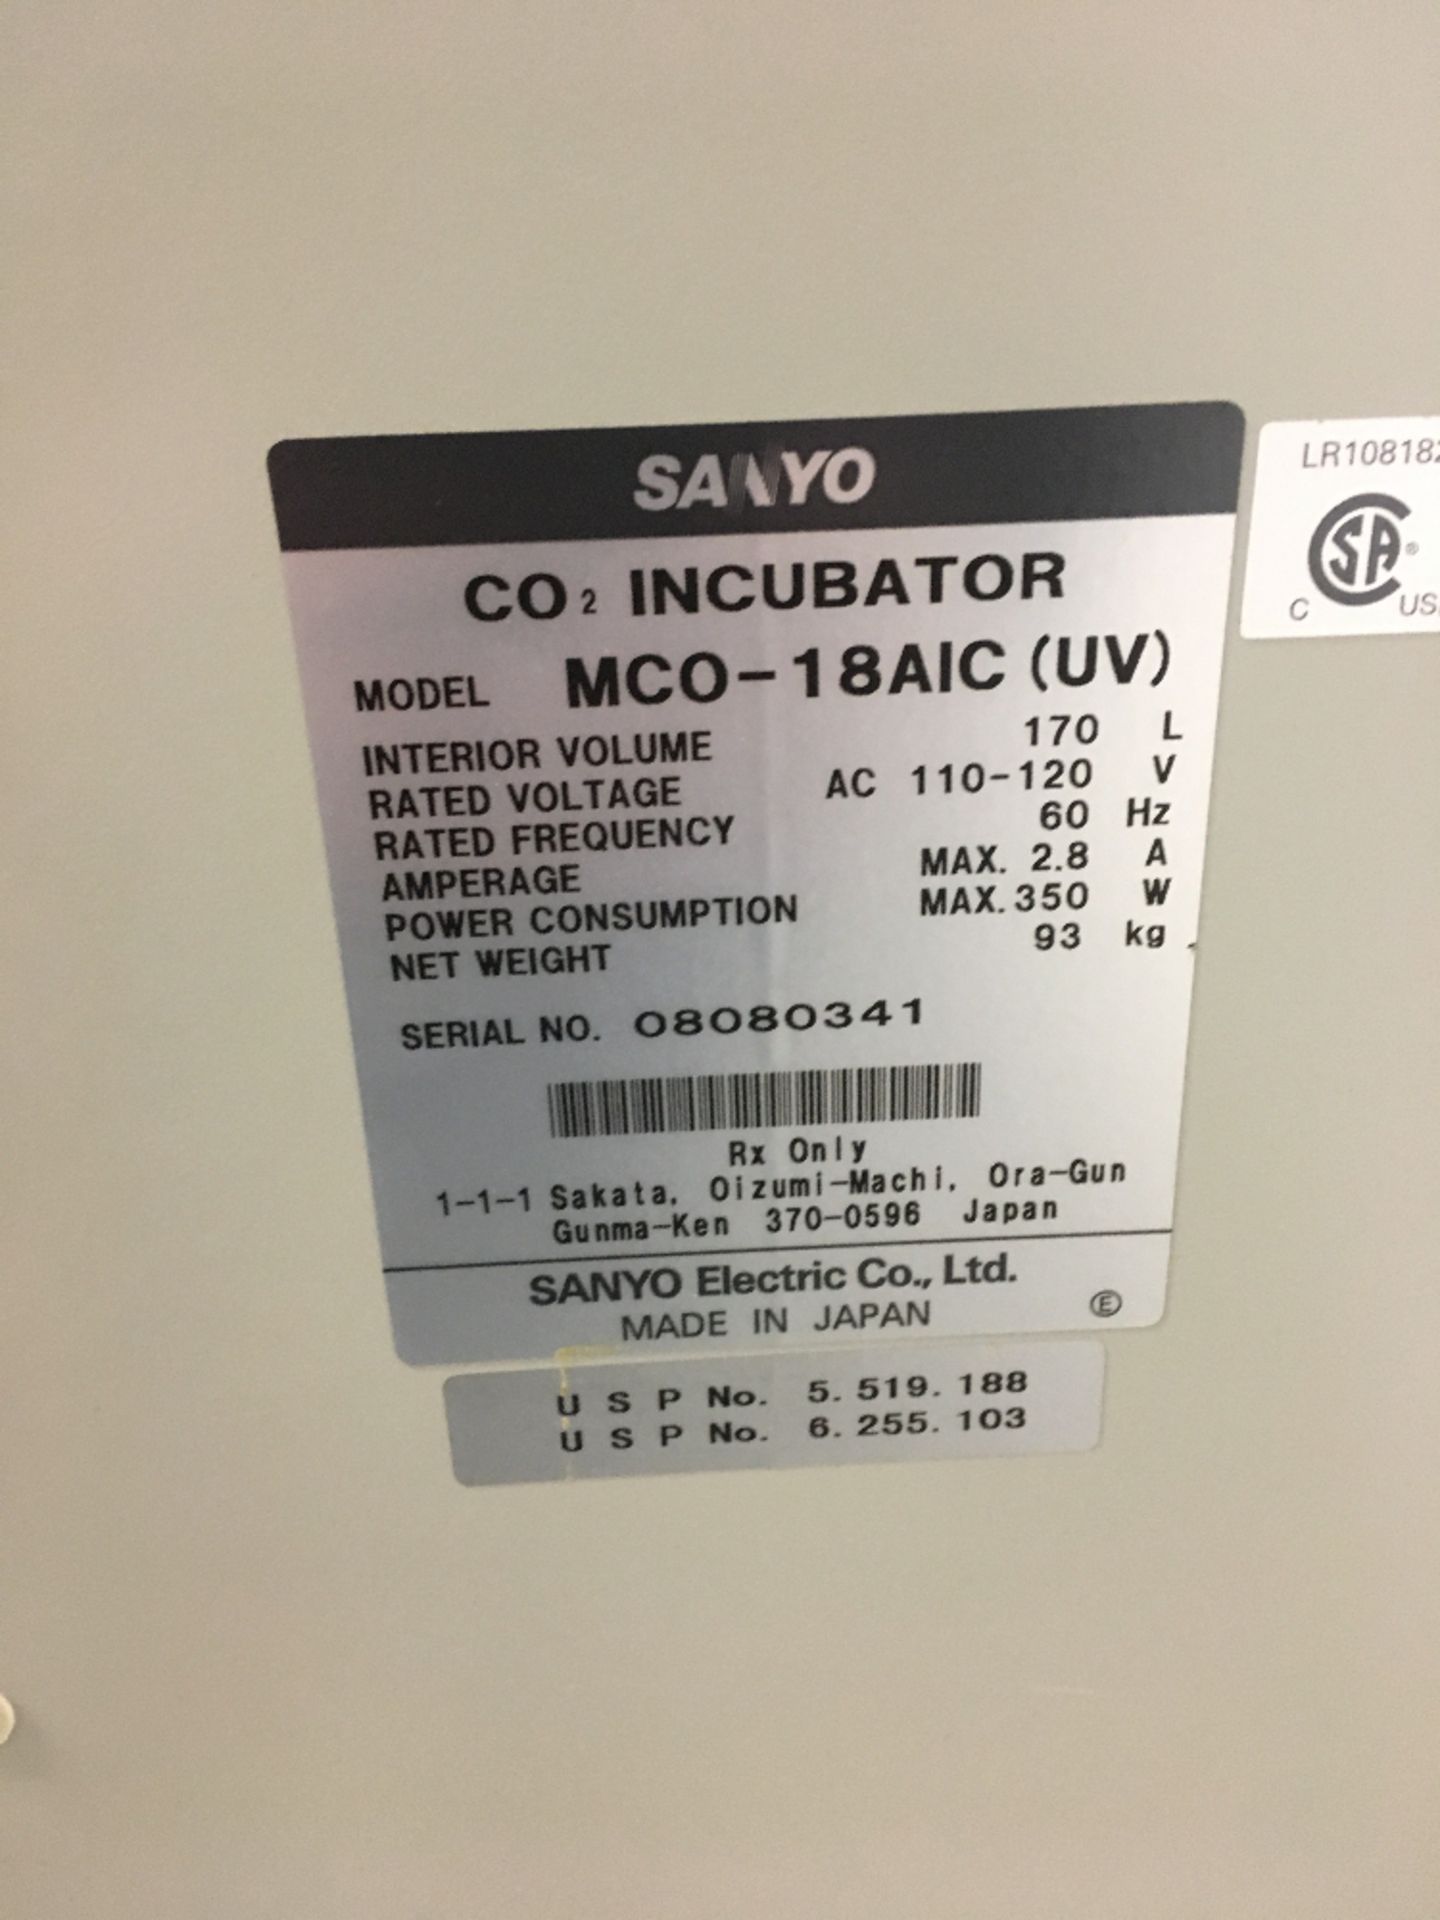 Sanyo MCO-18AIC (UV) Double Stacked CO2 Incubators - Image 3 of 4